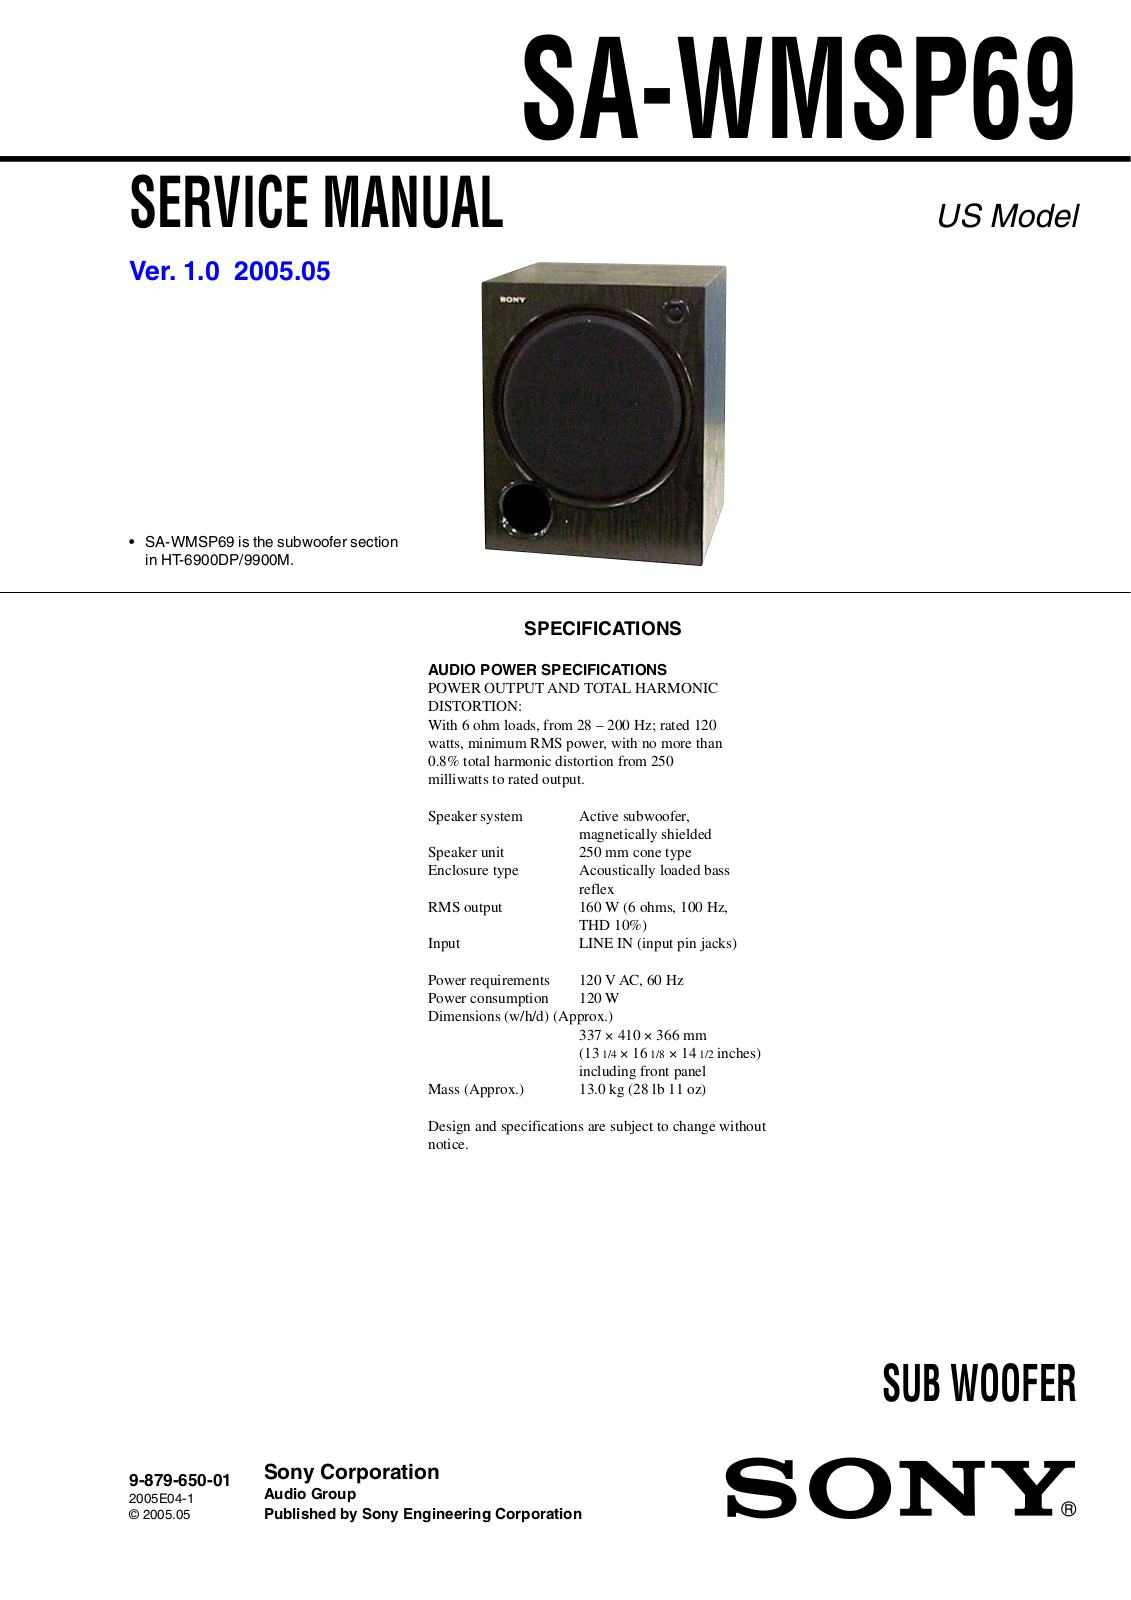 Sony SAWMSP-69, SAWNSP-69 Service manual